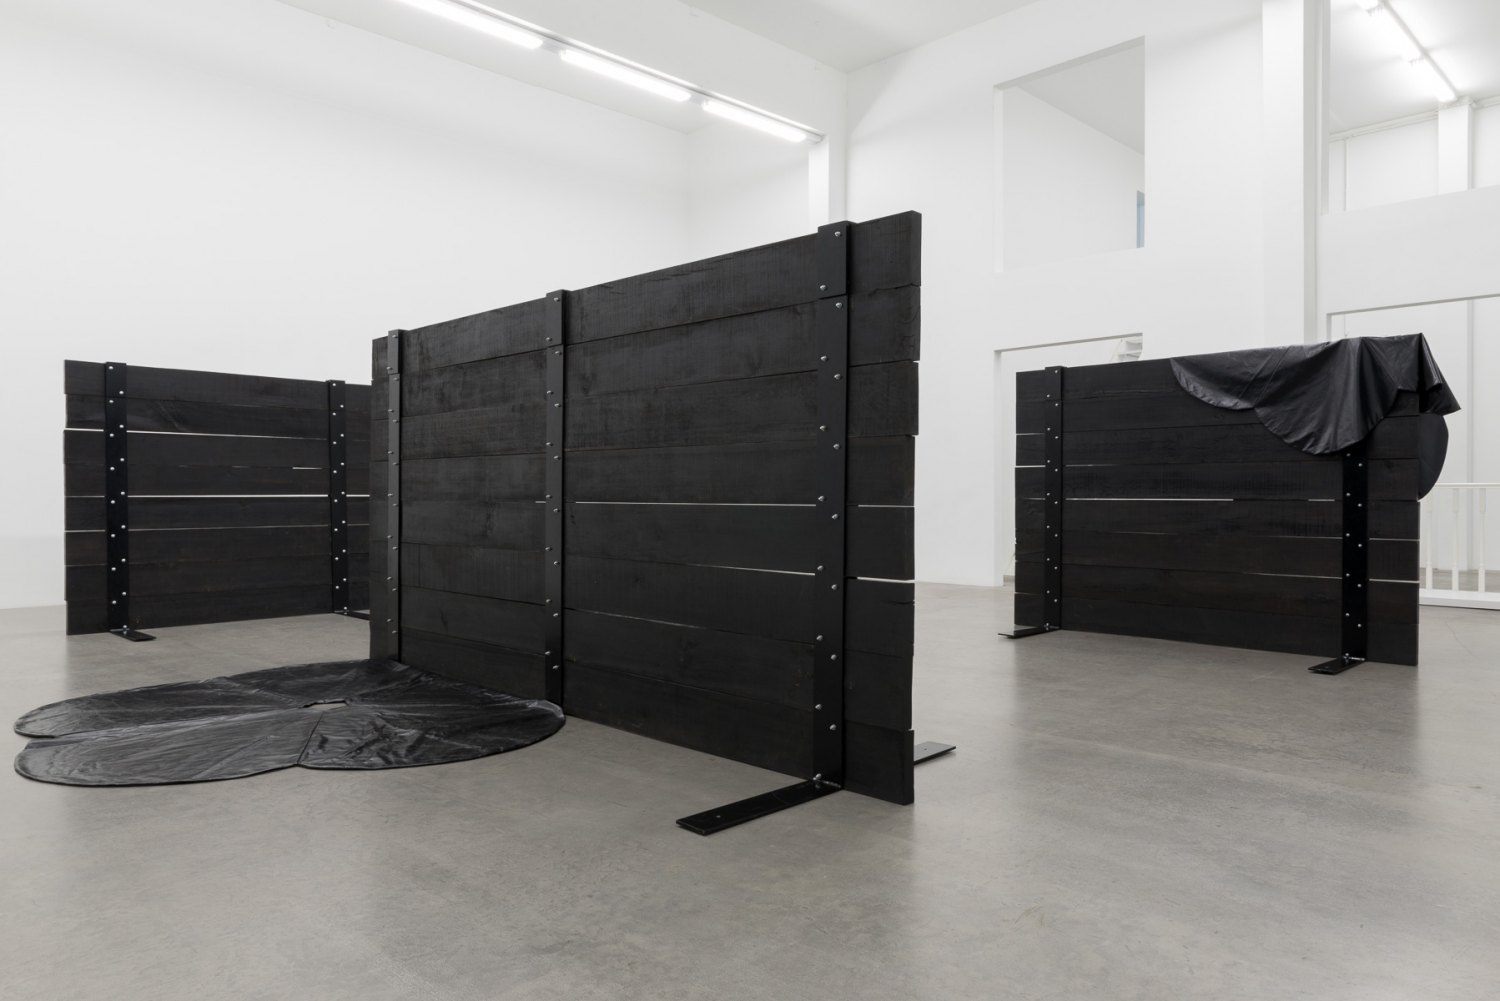 Tom Burr Abridged Installation view, Galerie Neu, Berlin, 2017